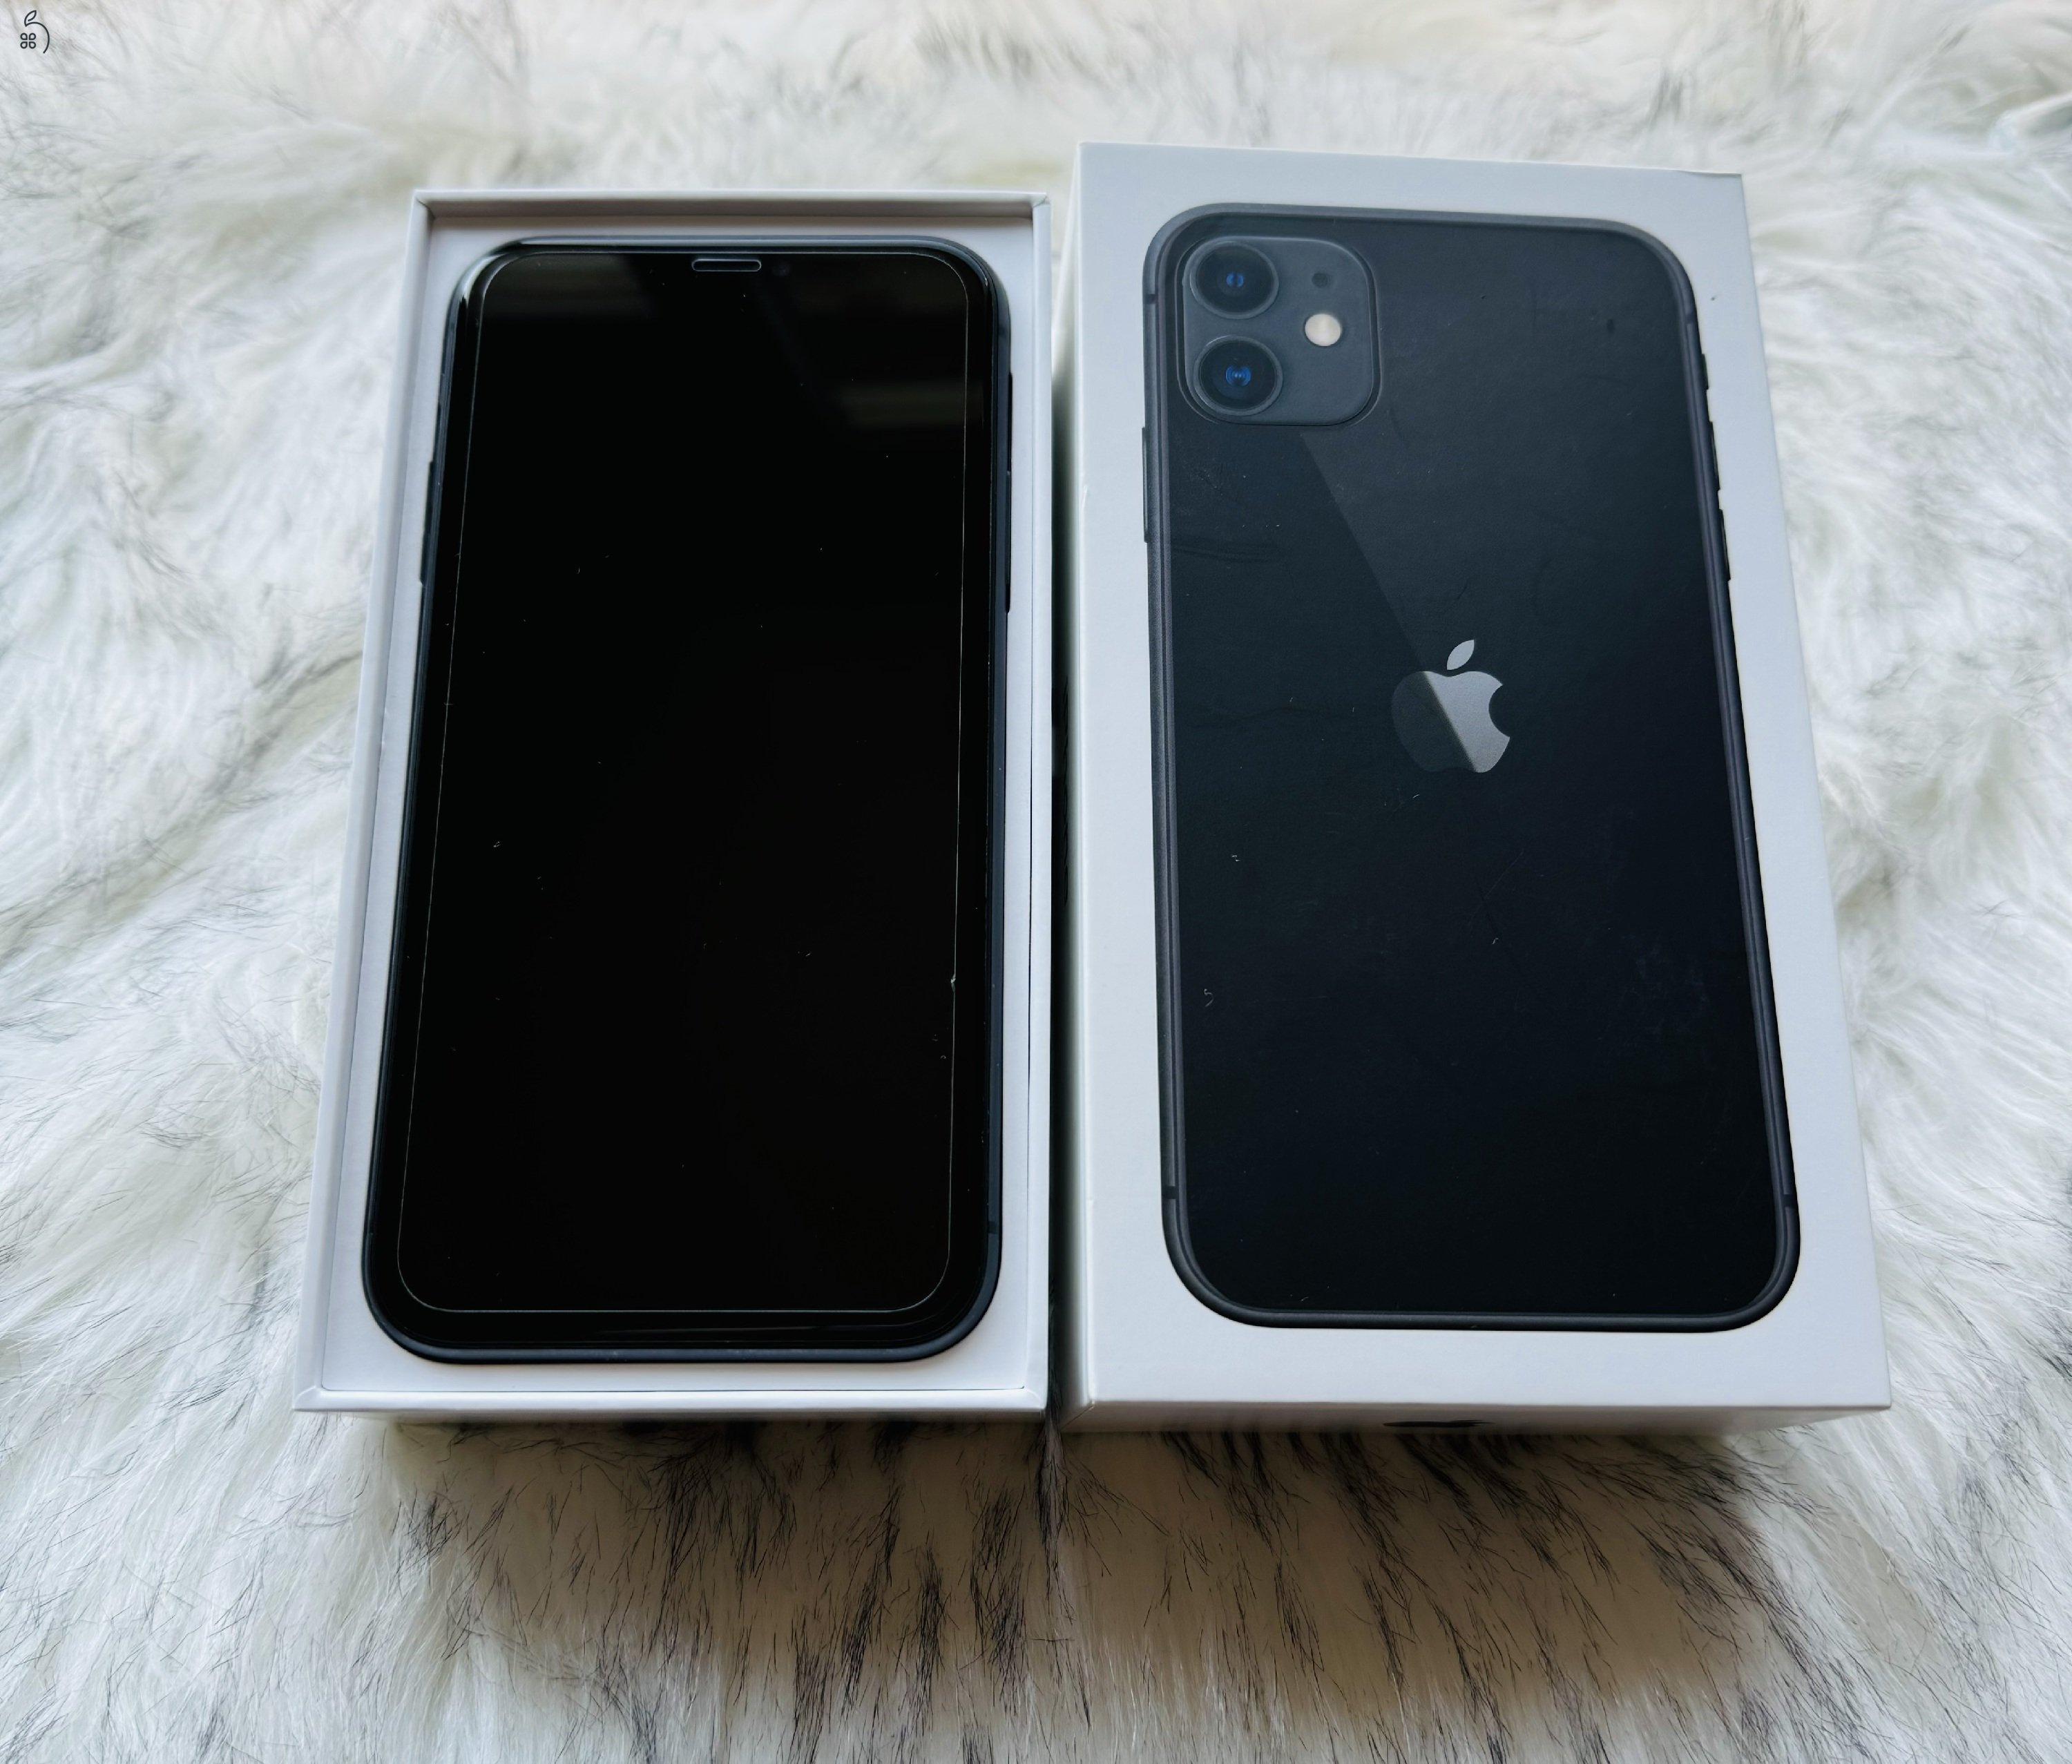 Iphone 11 128gb fekete,független